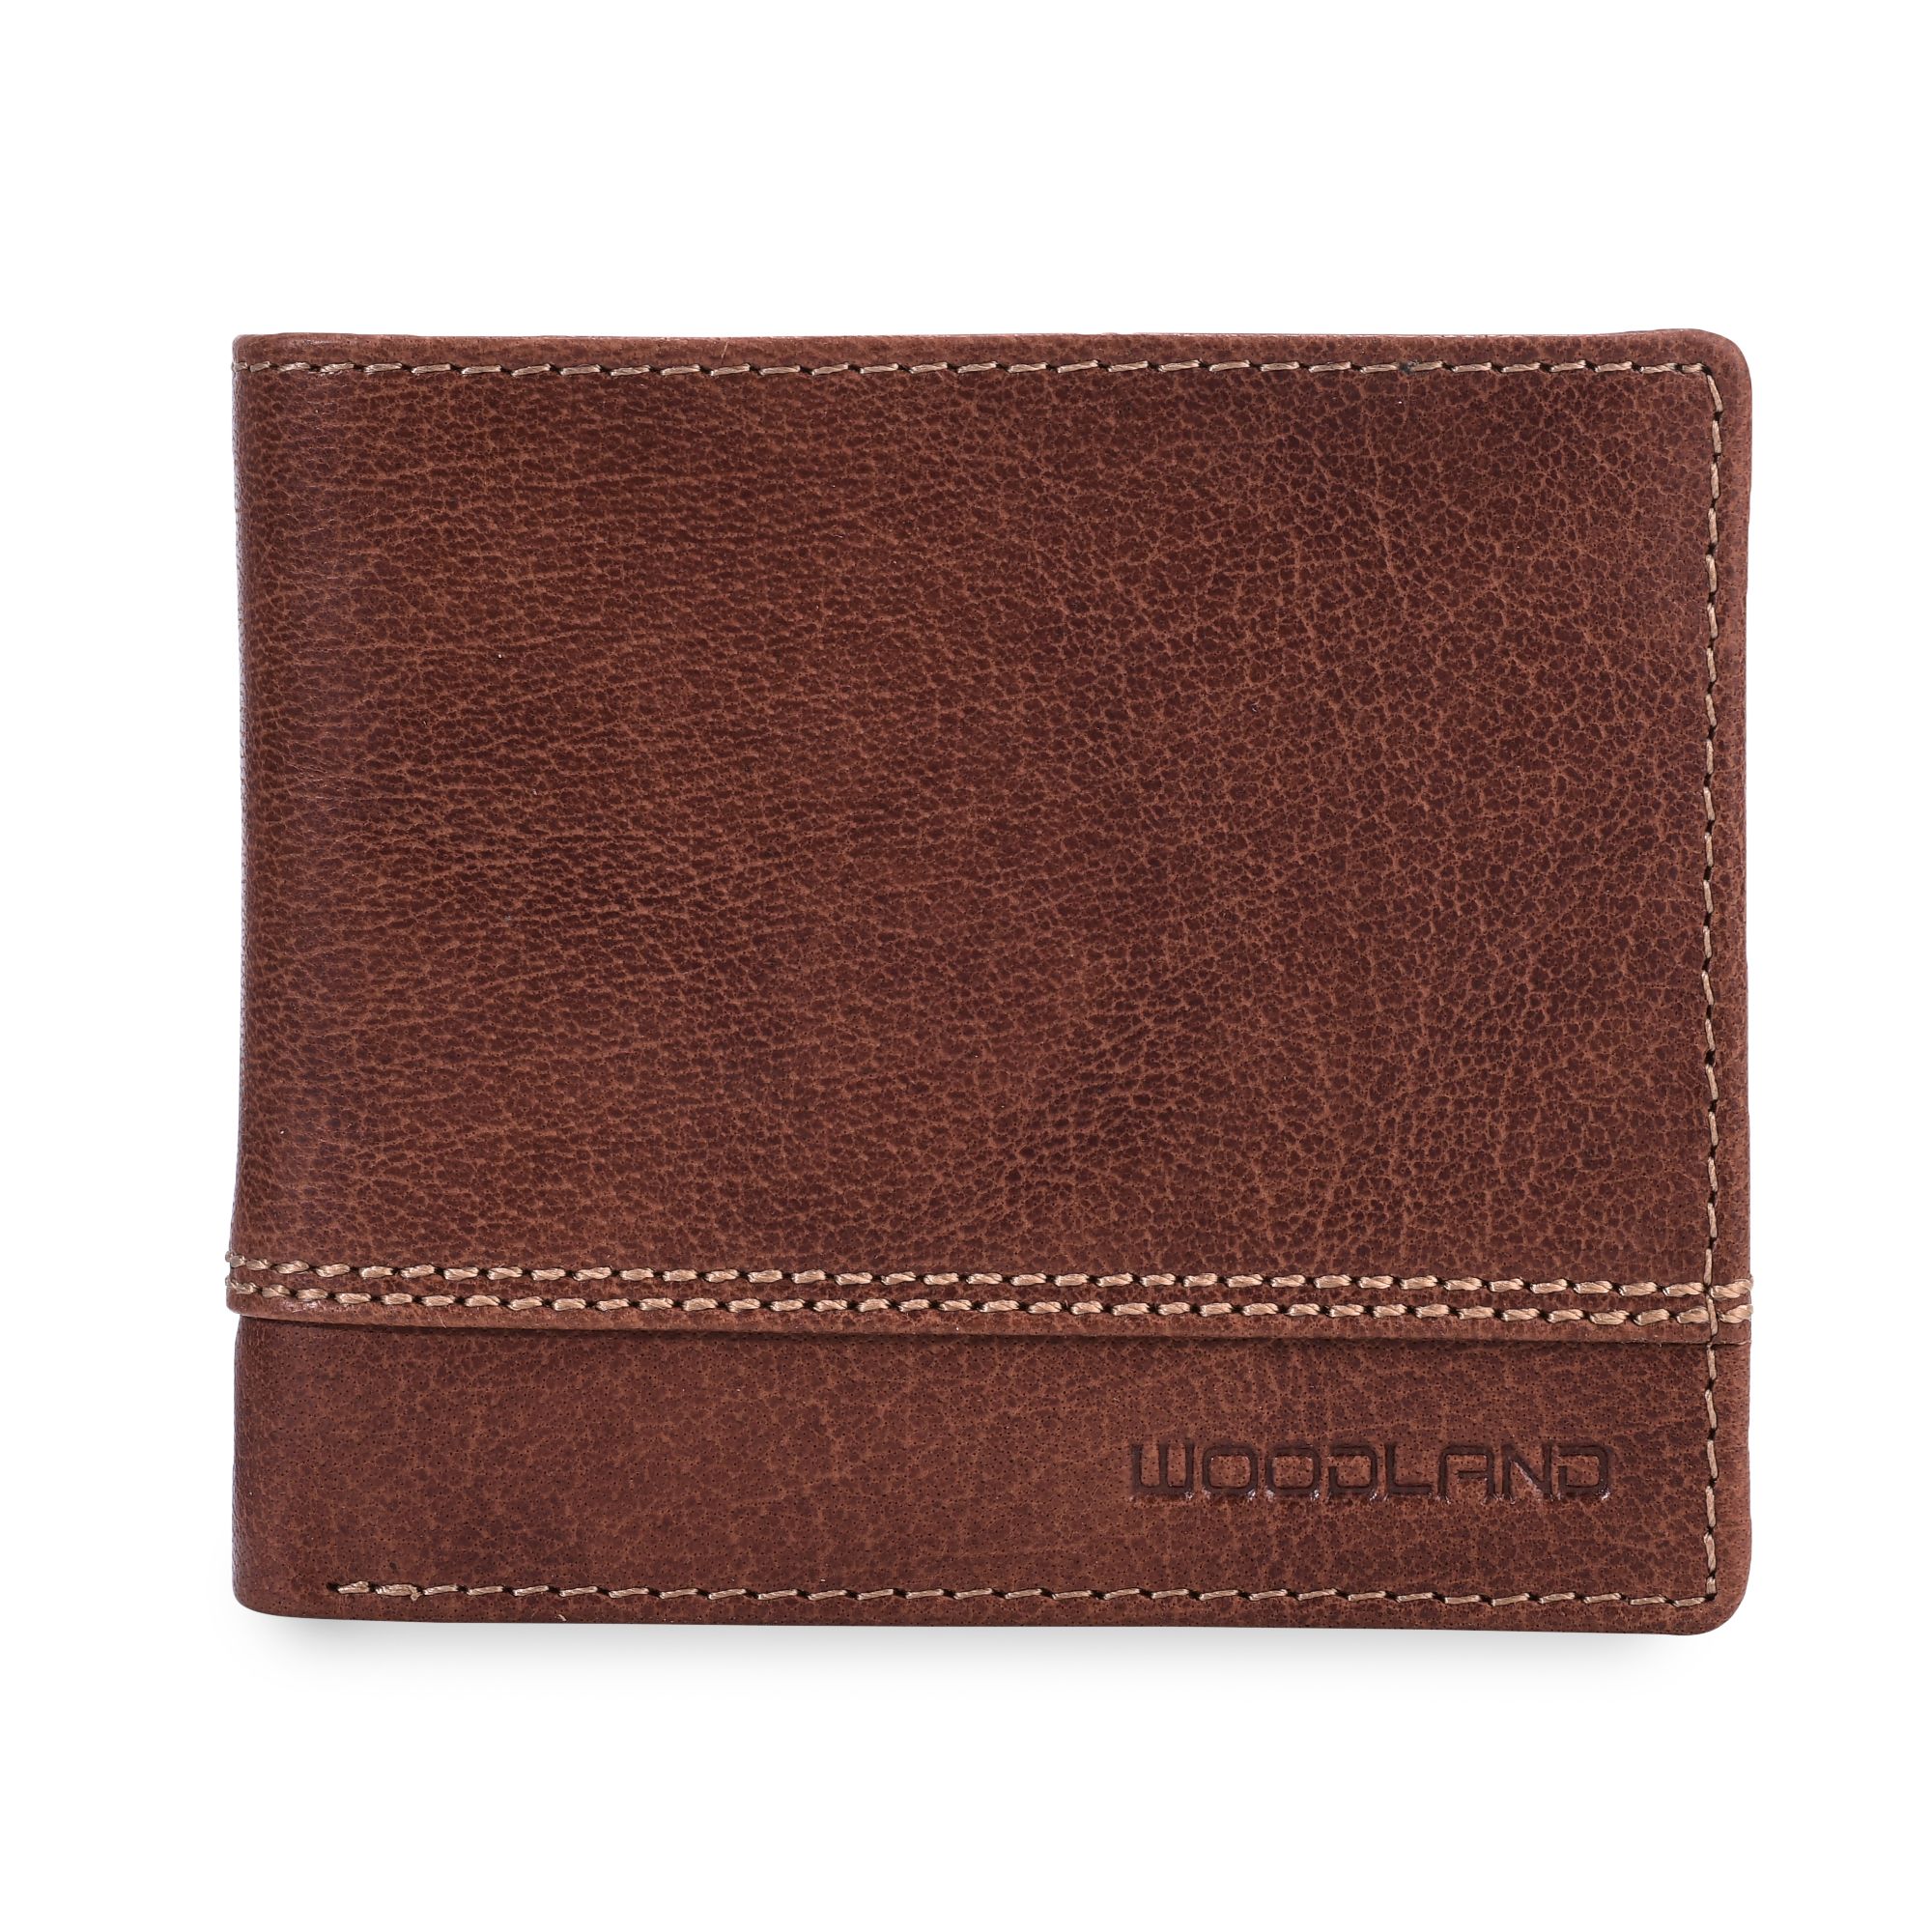 Buy Brown Color Woodland Men's Wallet at Amazon.in